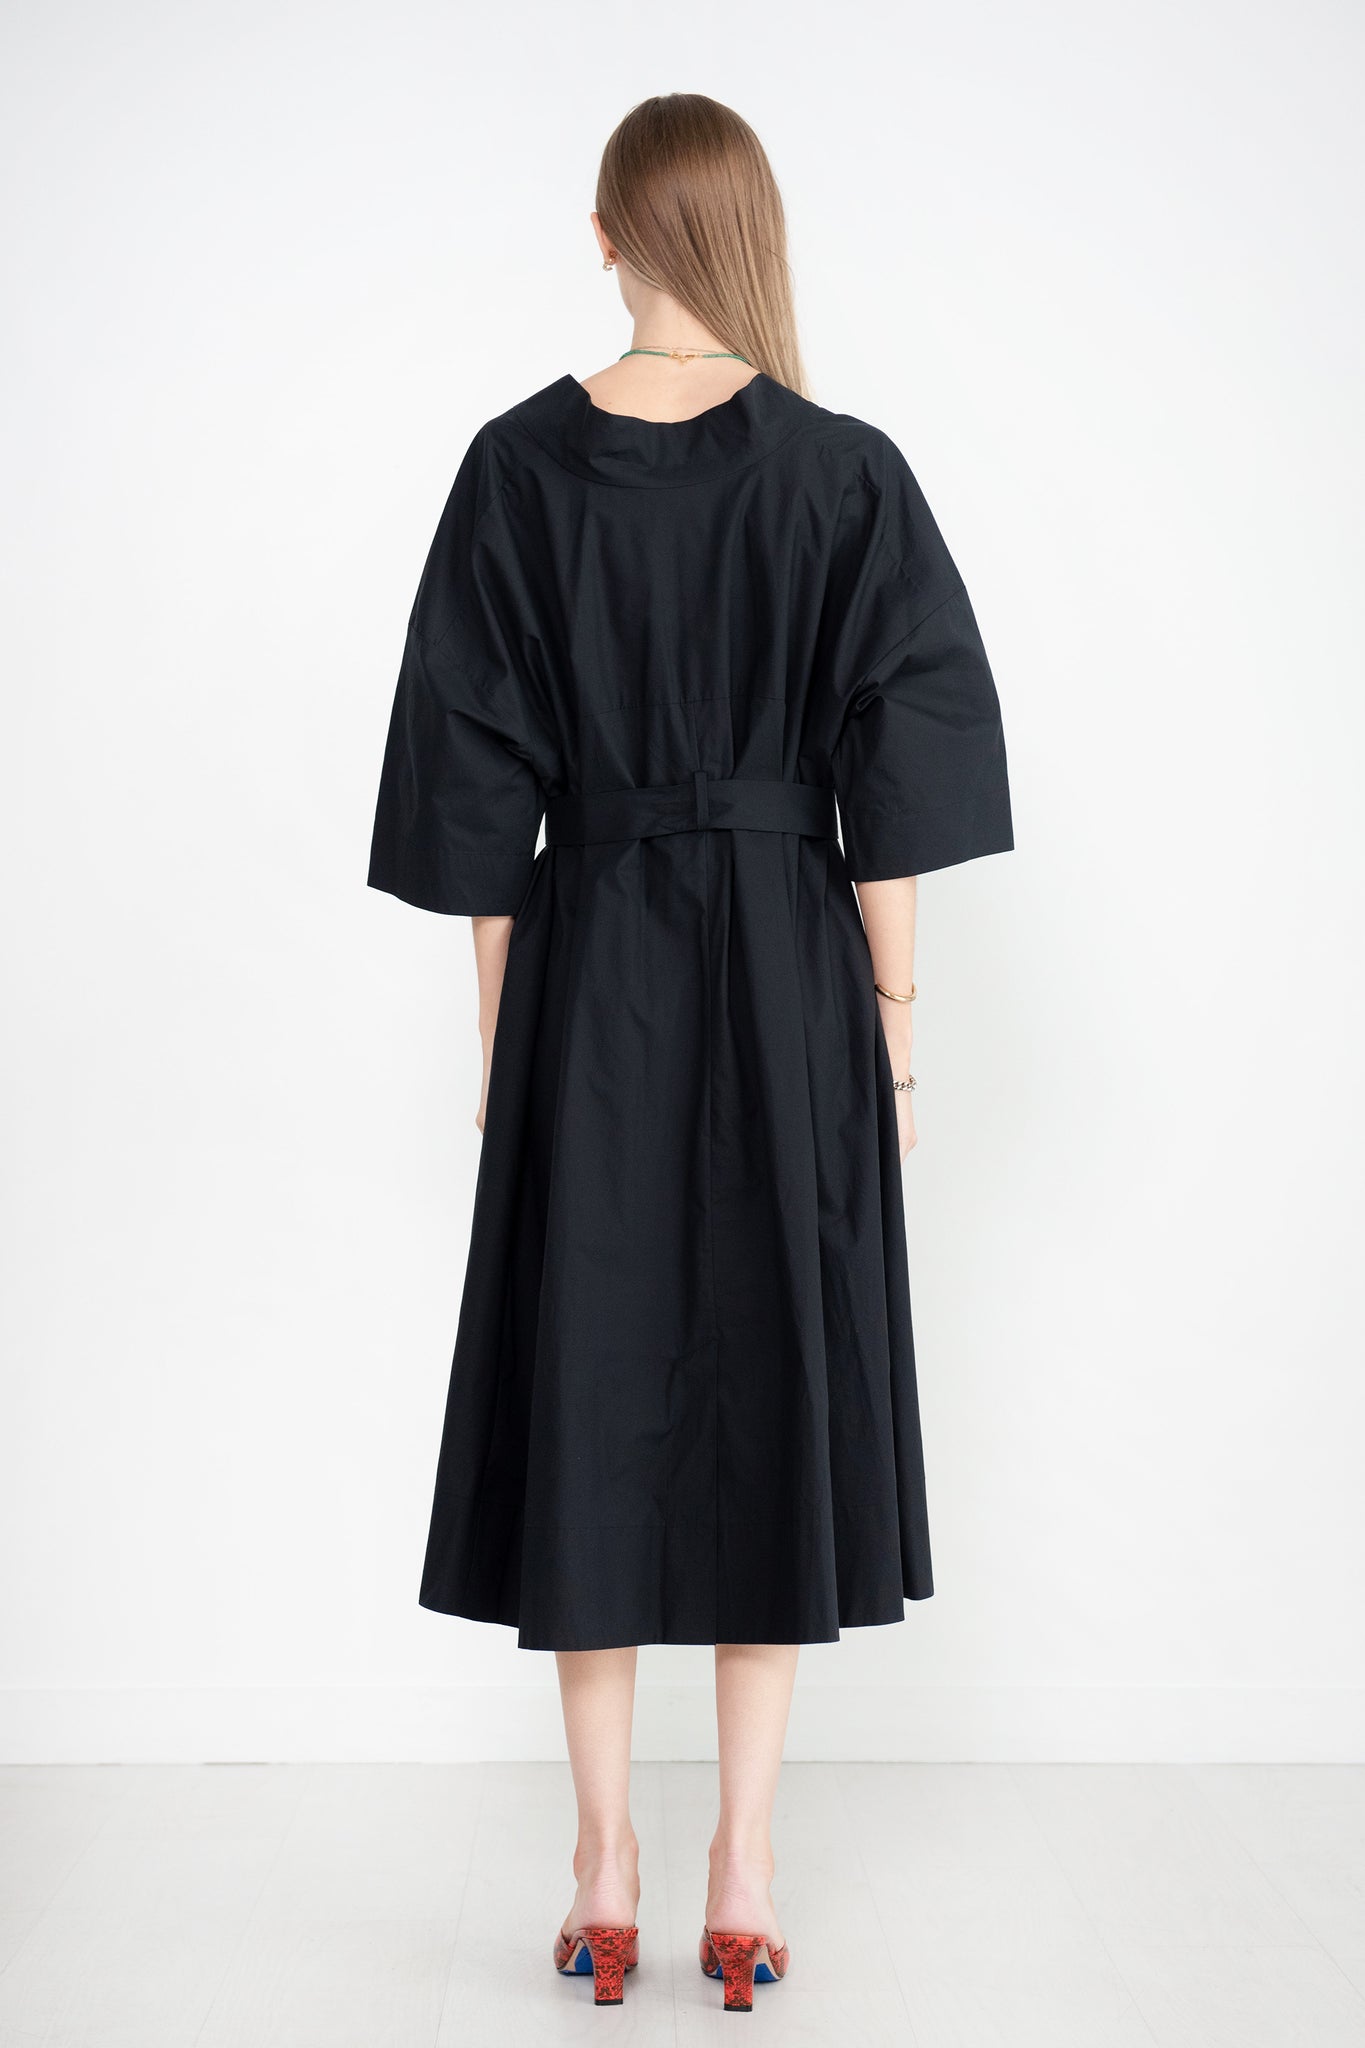 RACHEL COMEY - Copake Dress, Black